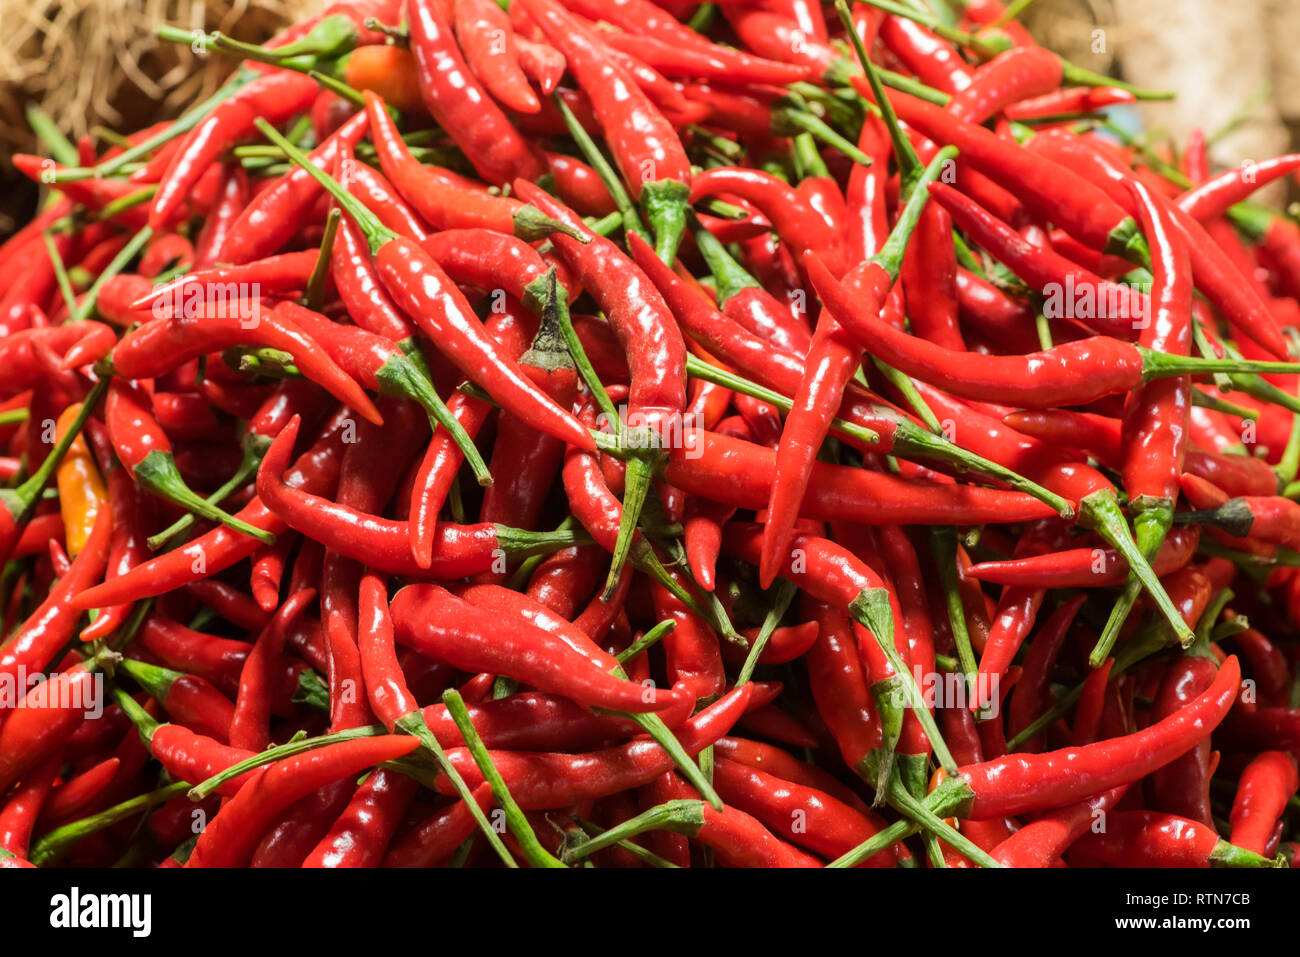 Haufen roter Chili Pfeffer im Korb auf einem Markt Stockfoto